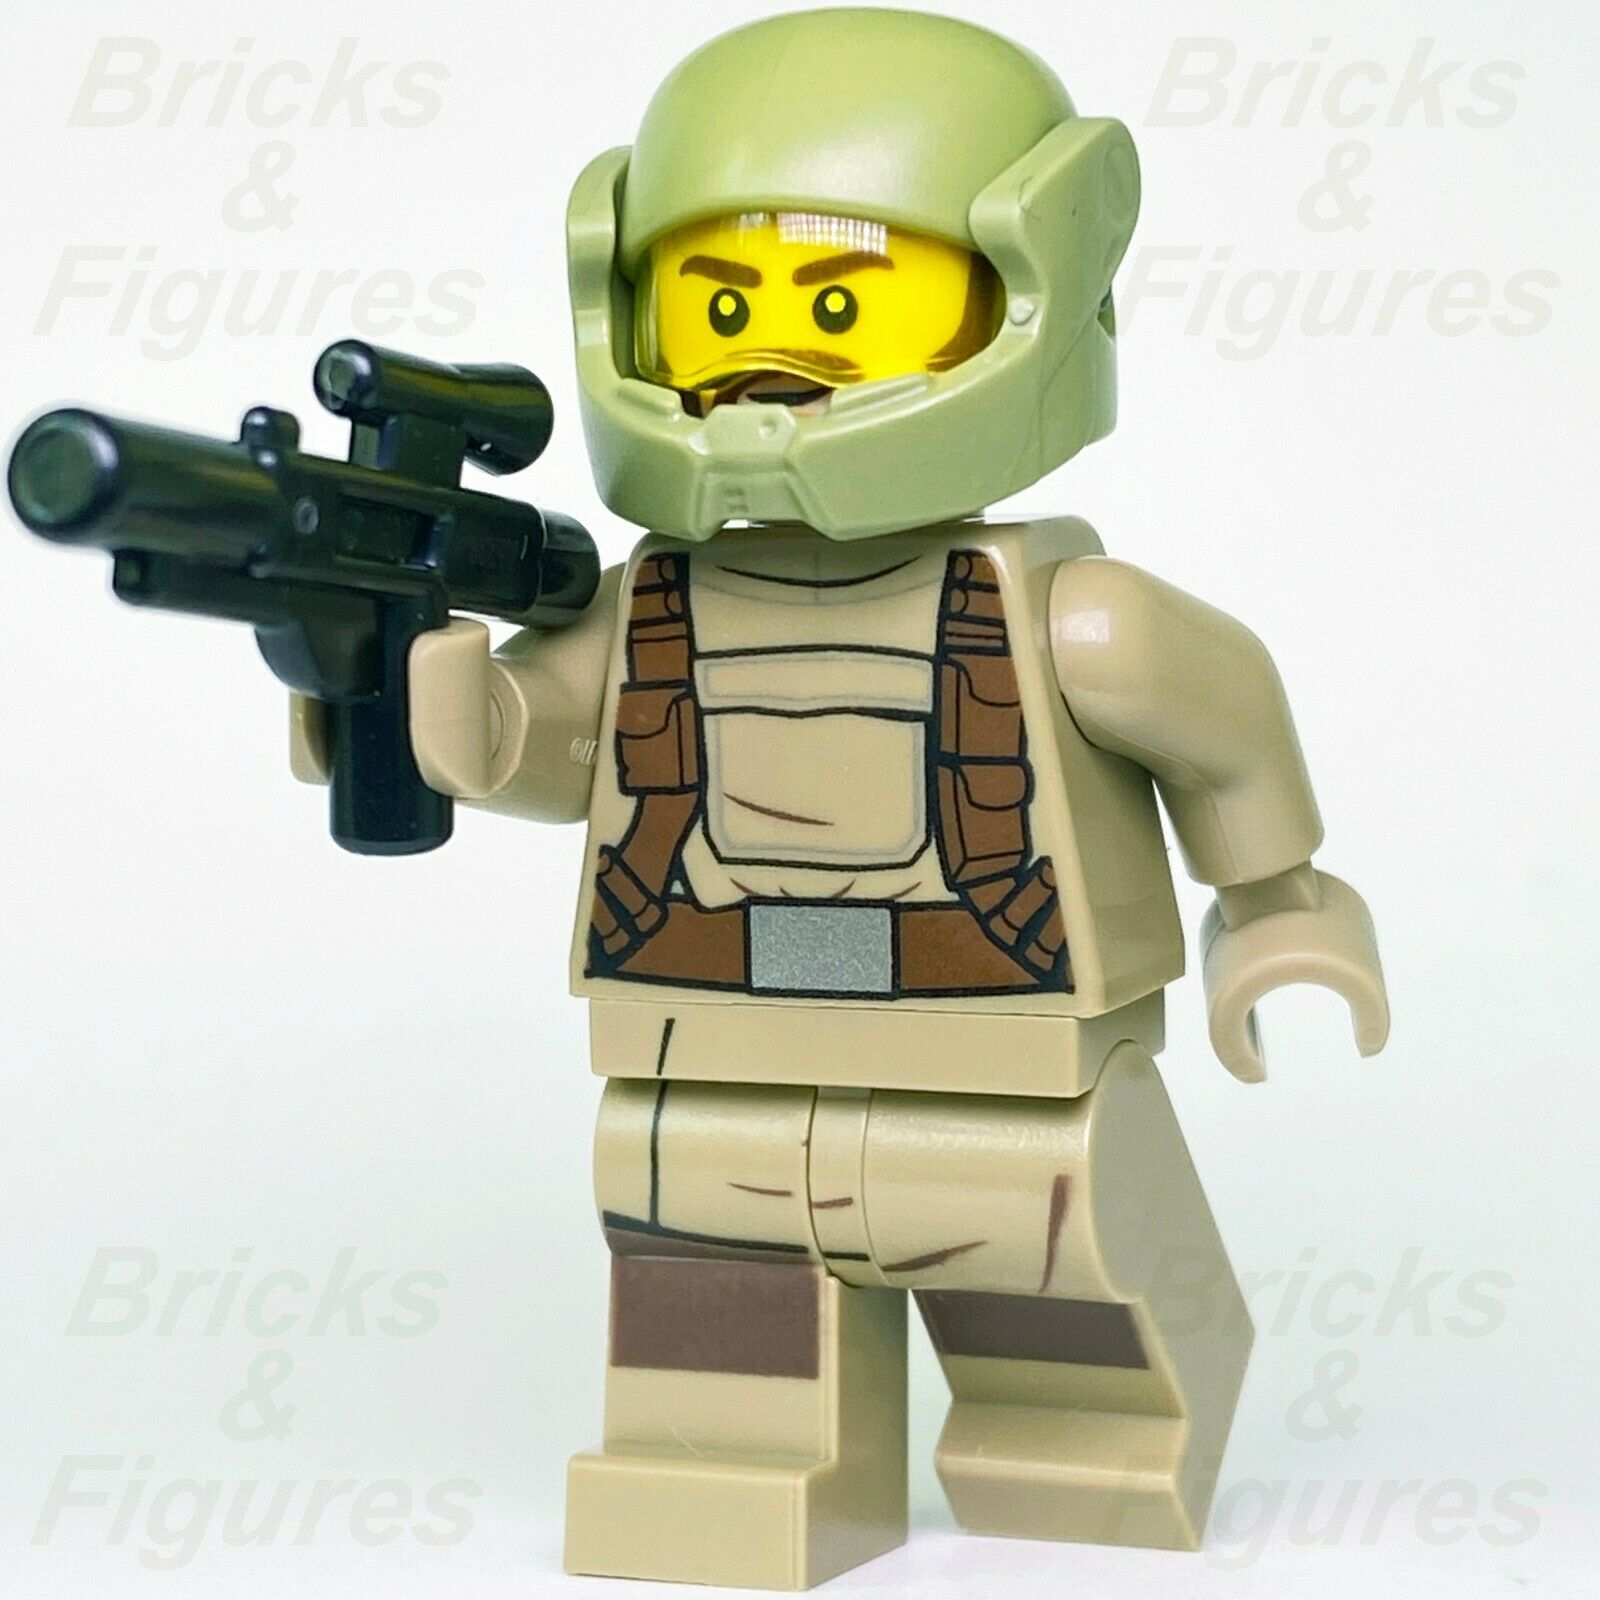 New Star Wars LEGO Resistance Trooper with Beard The Last Jedi Minifigure 75189 - Bricks & Figures